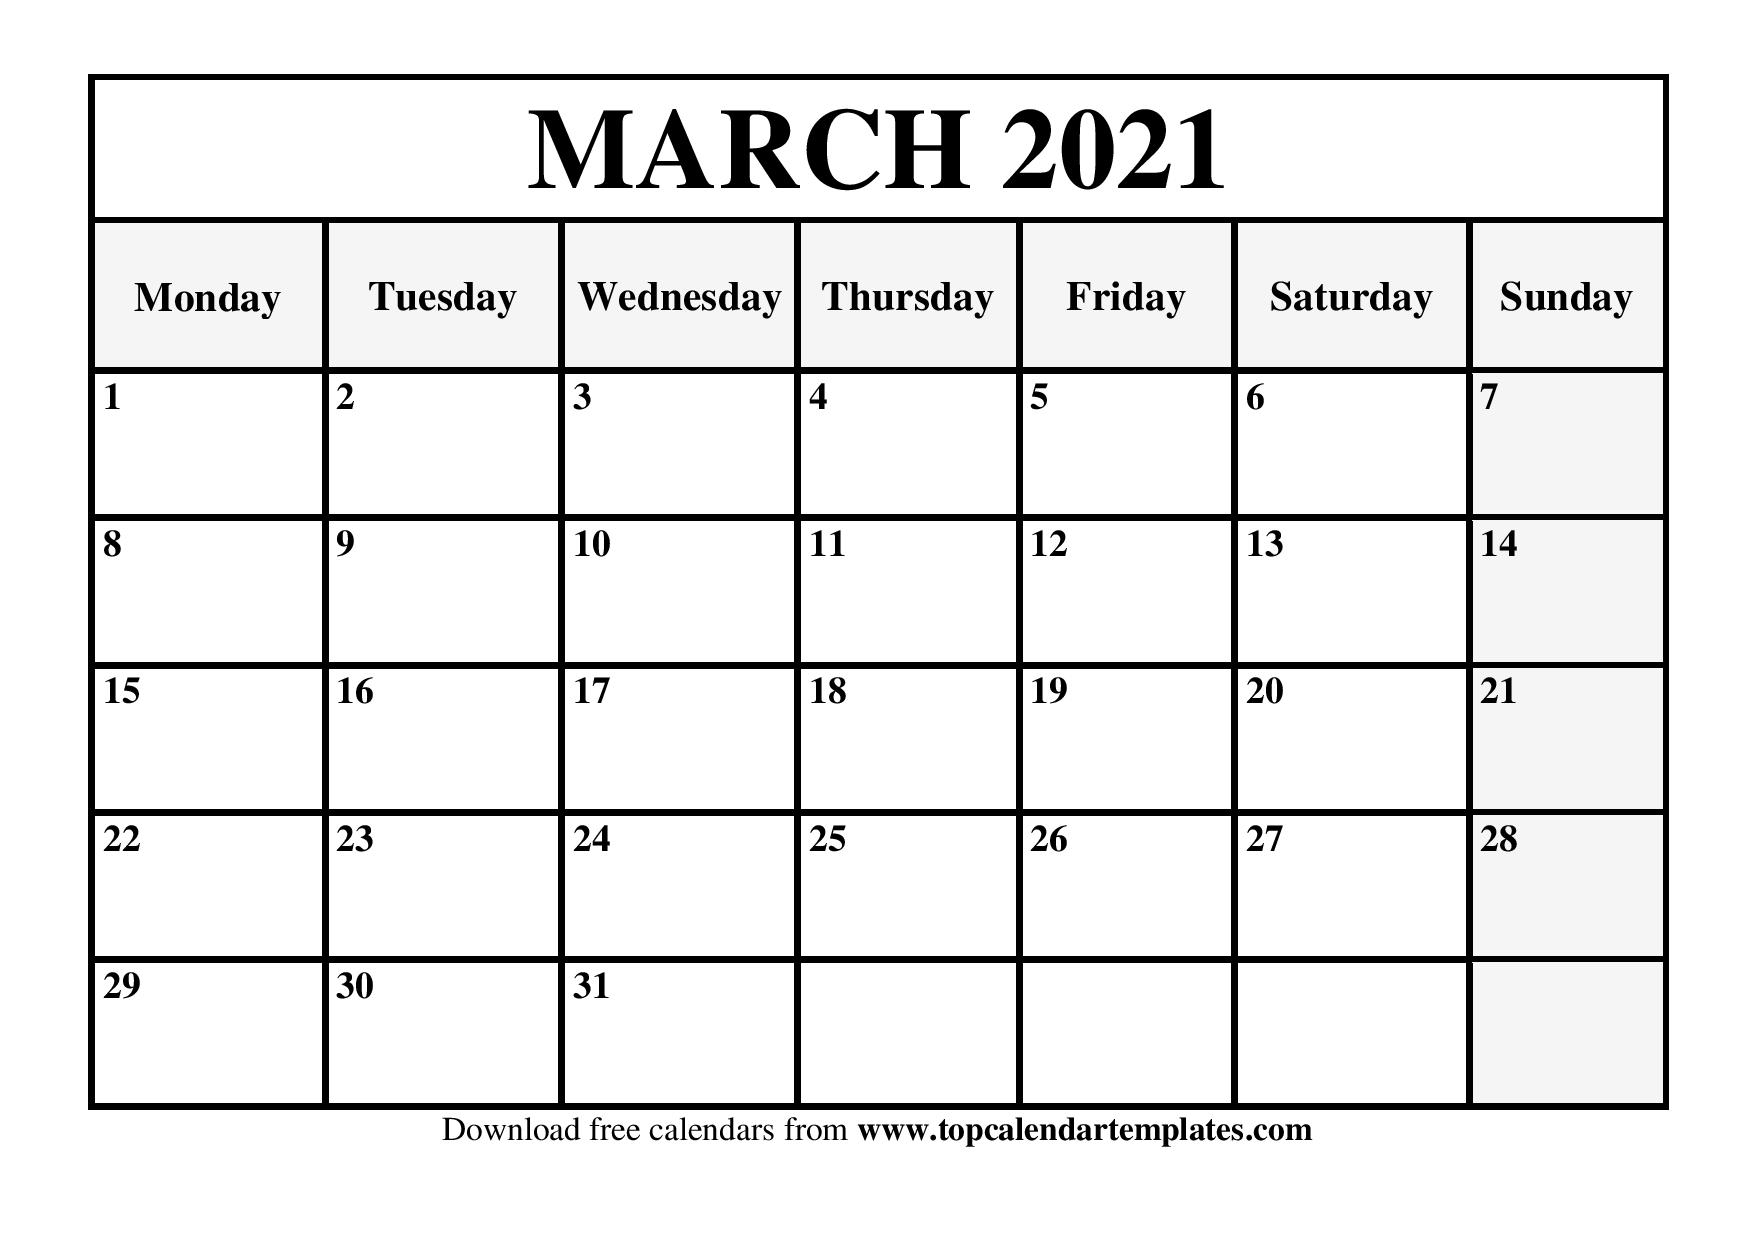 Get June 2022 Printable Calendar Wiki